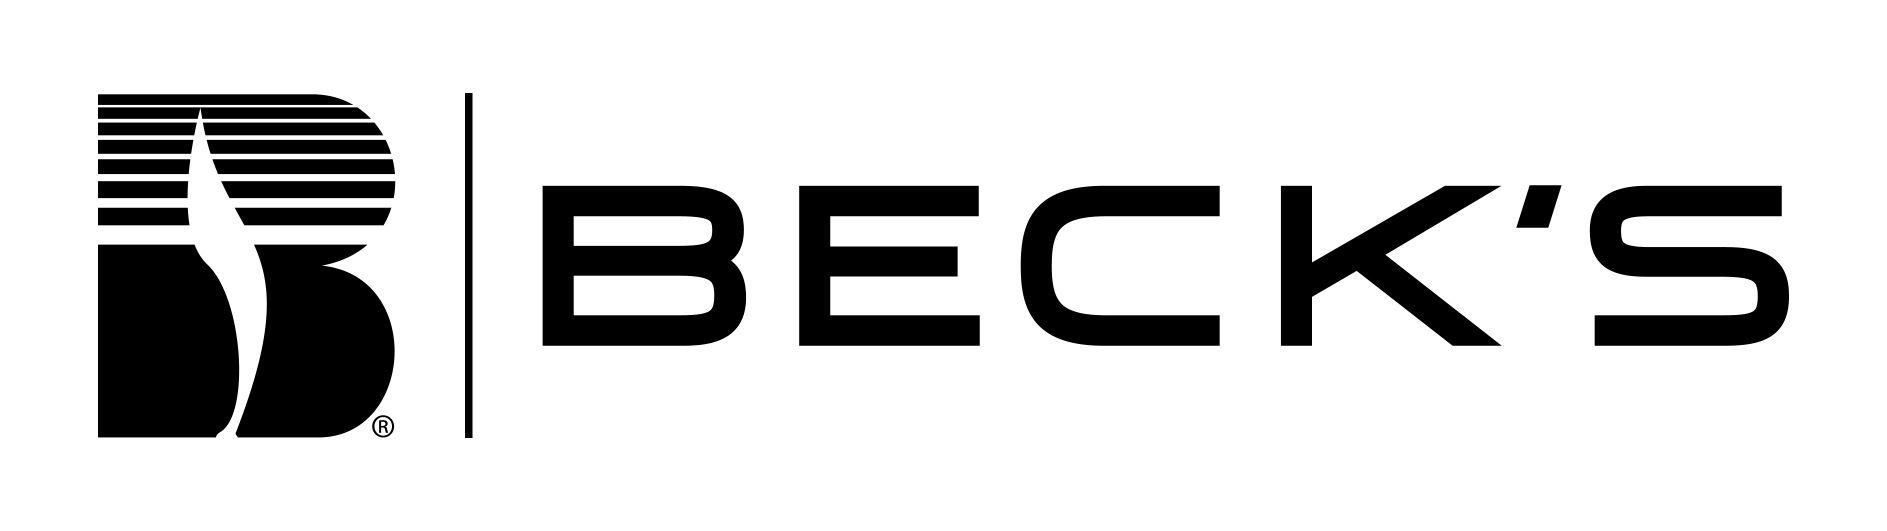 Beck Logo - Becks Logos For Print Or Interactive | Beck's Hybrids Multimedia